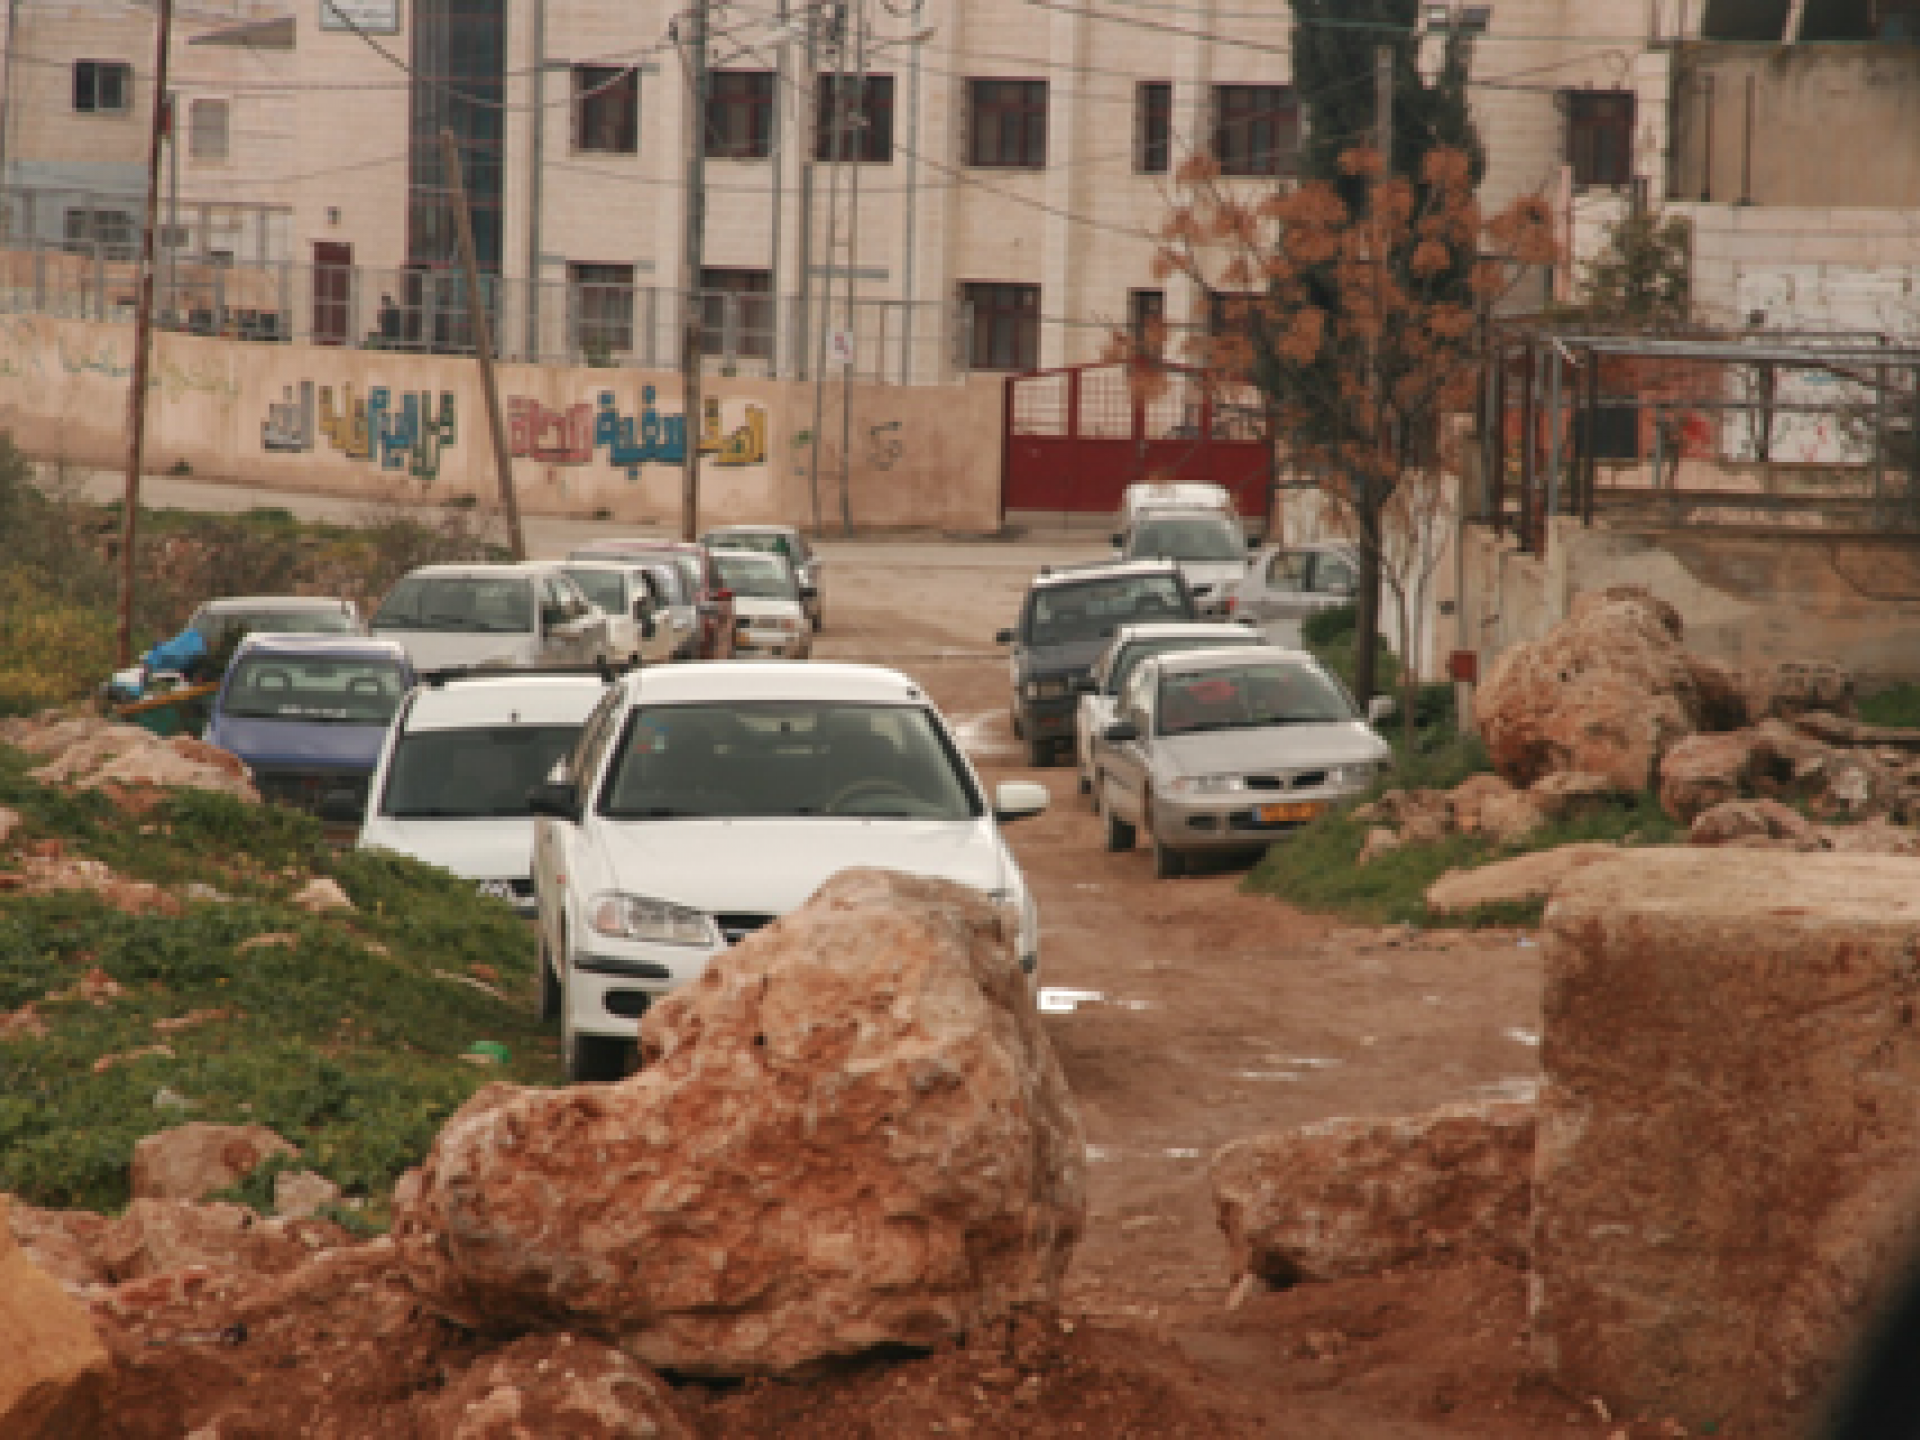 The blocked entrance to Qliqalis 